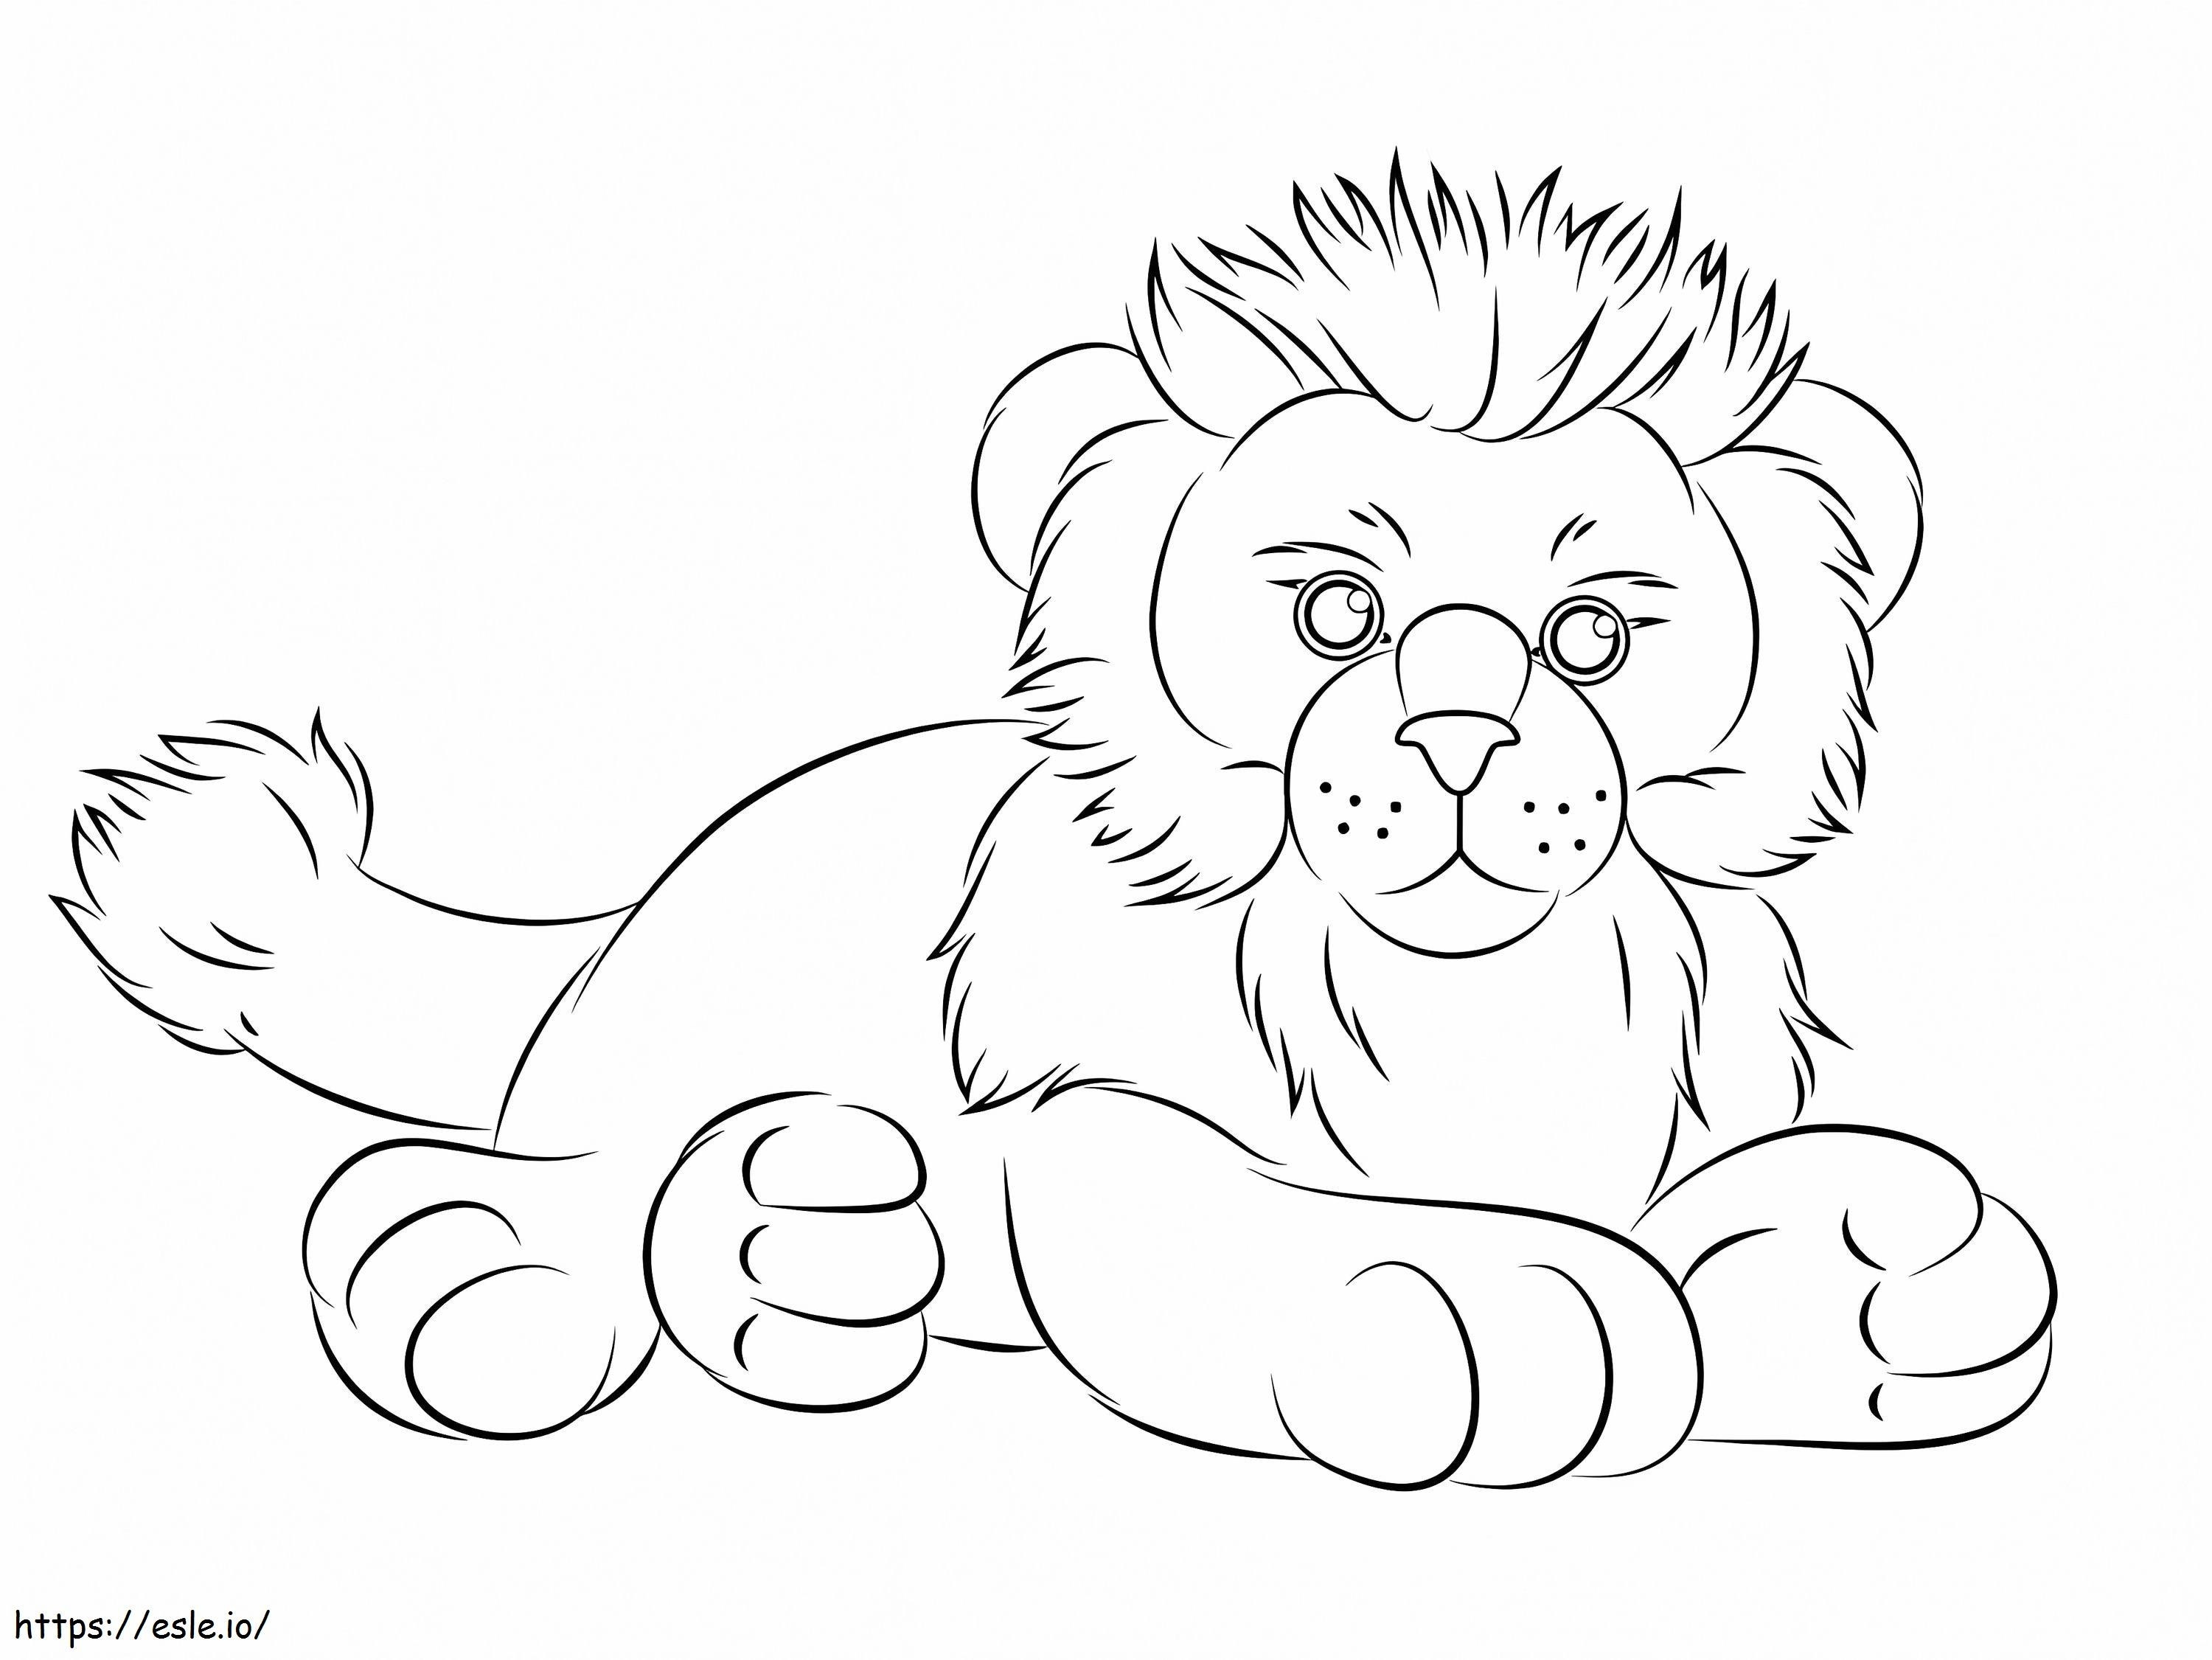 Printable Webkinz Lion coloring page